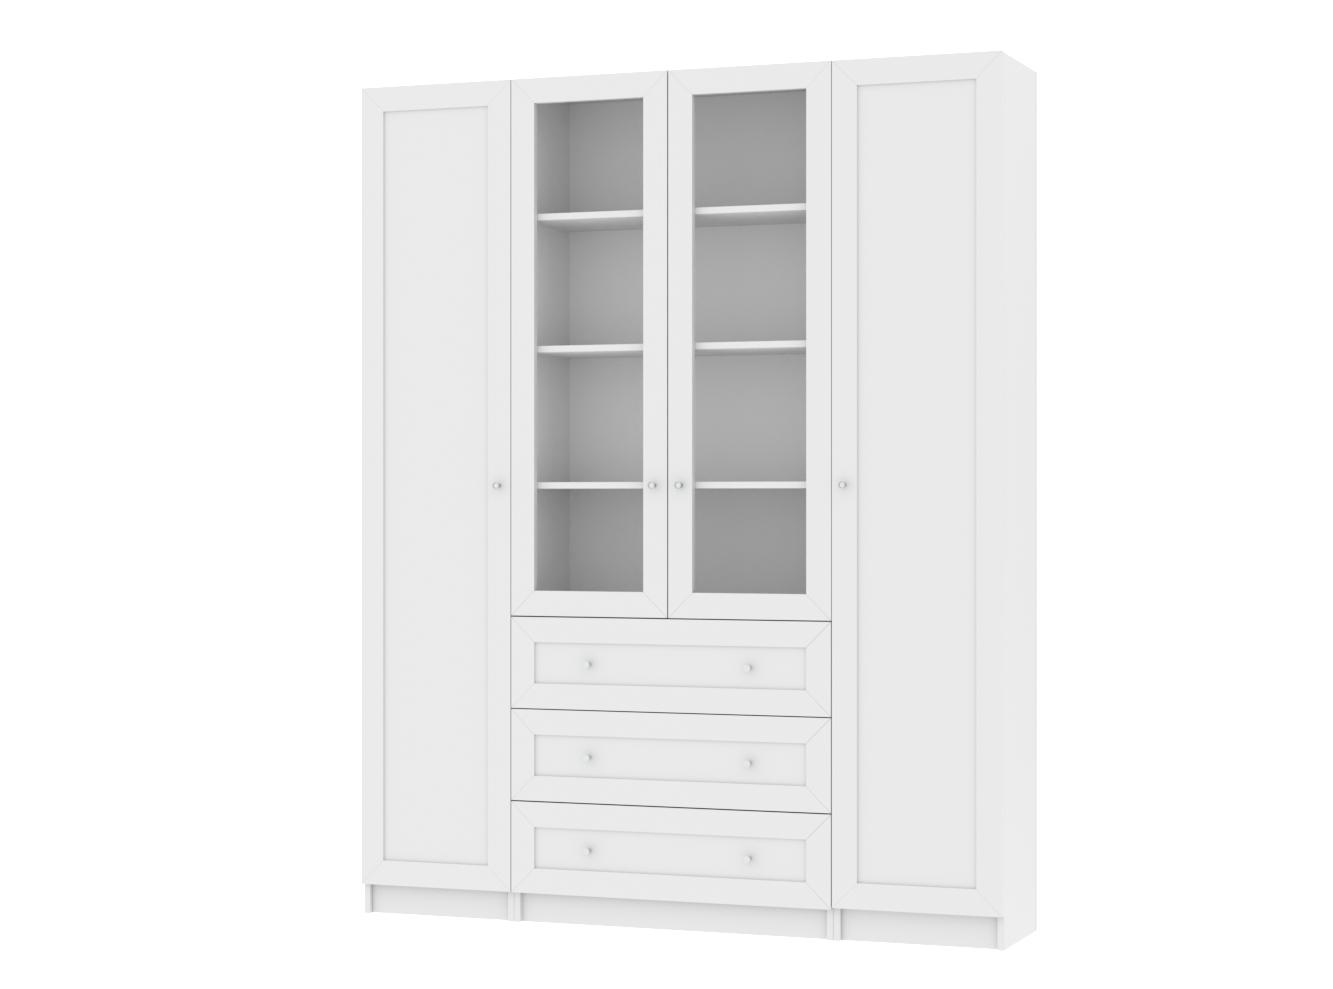 Книжный шкаф Билли 361 white ИКЕА (IKEA) изображение товара